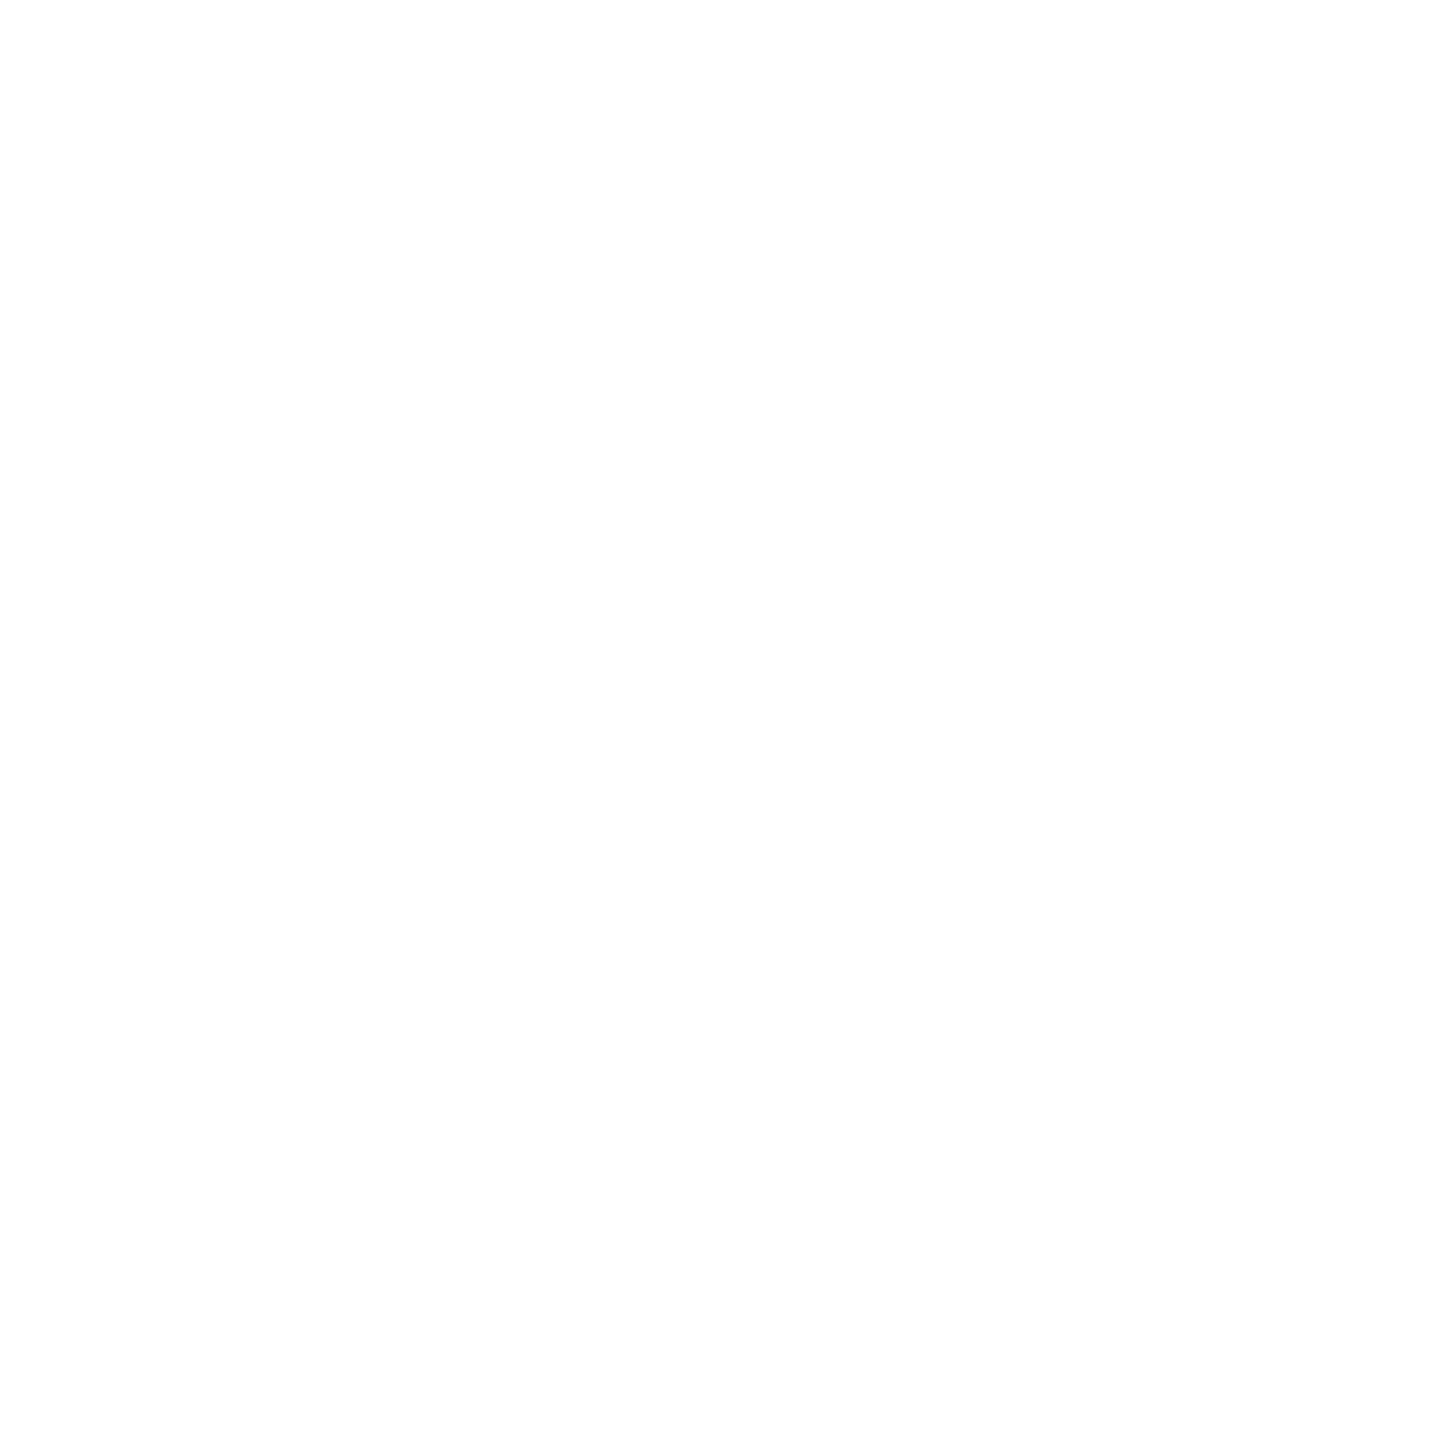 Mistress Green